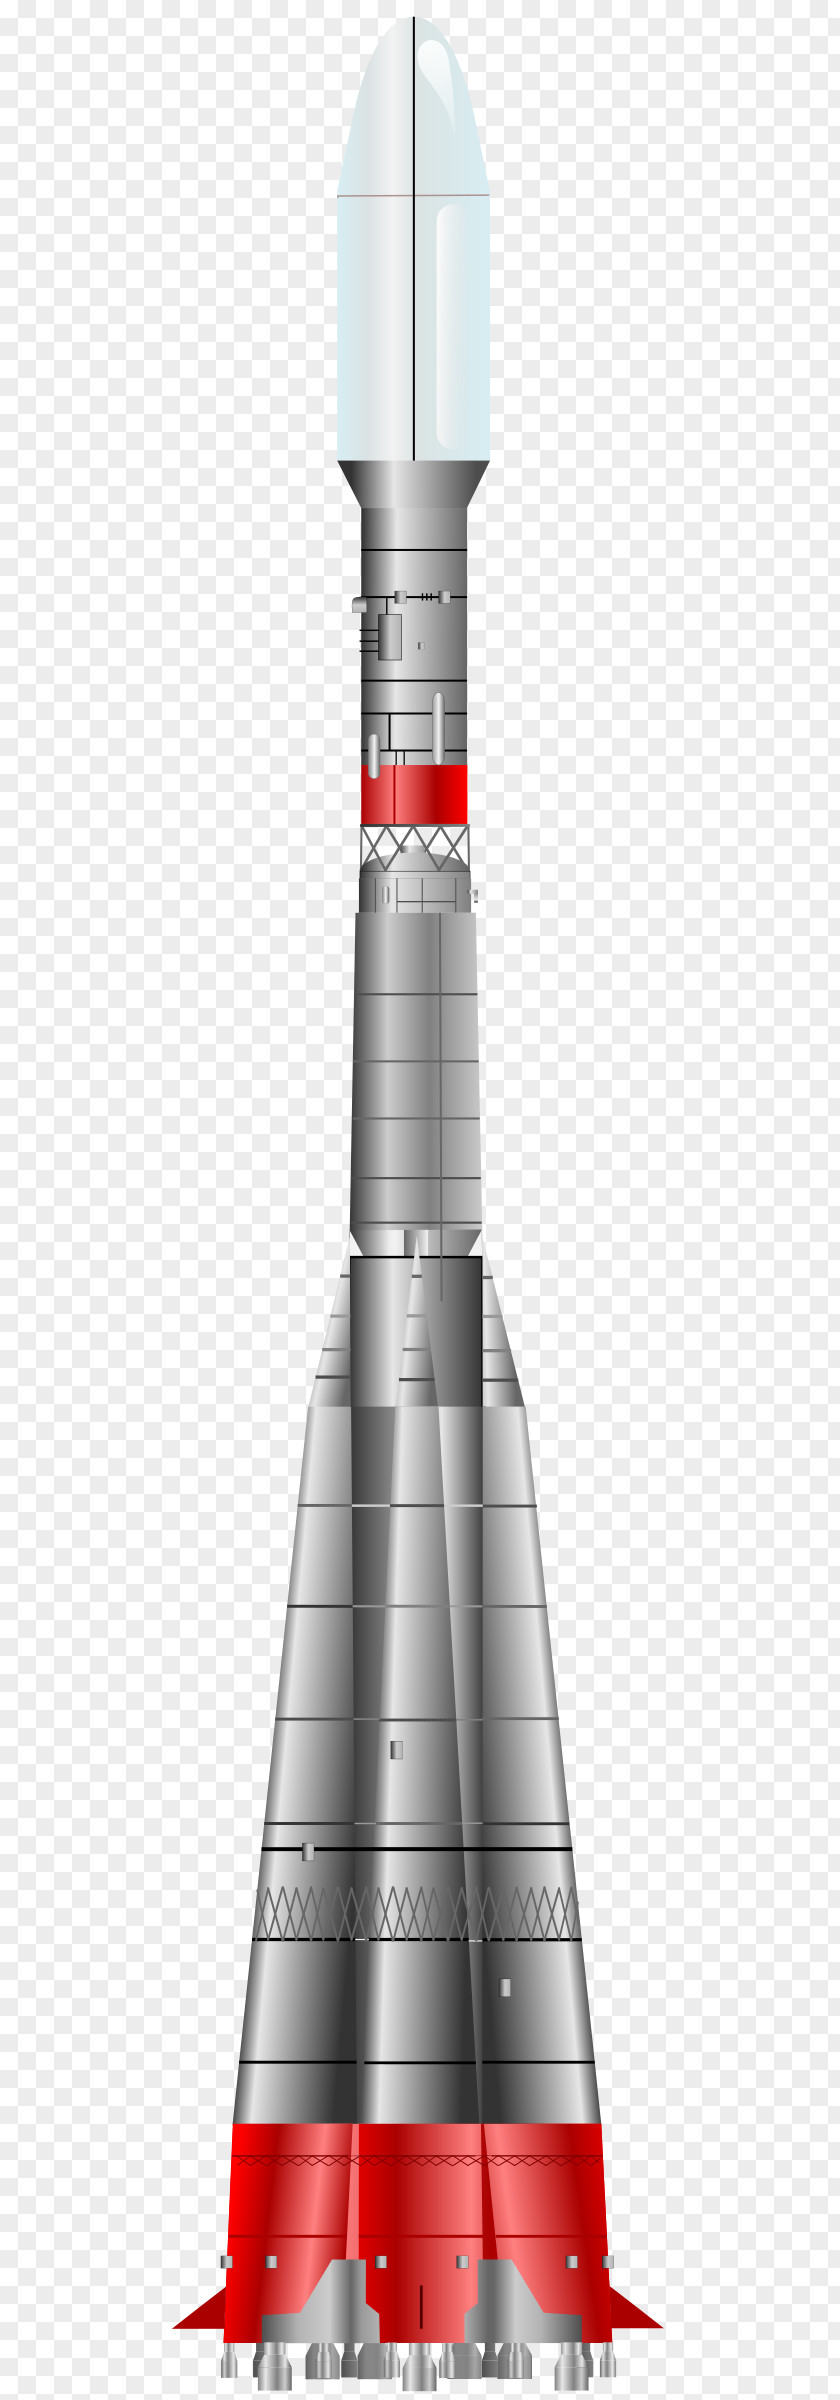 Rocket Soviet Space Program Soyuz Spacecraft PNG